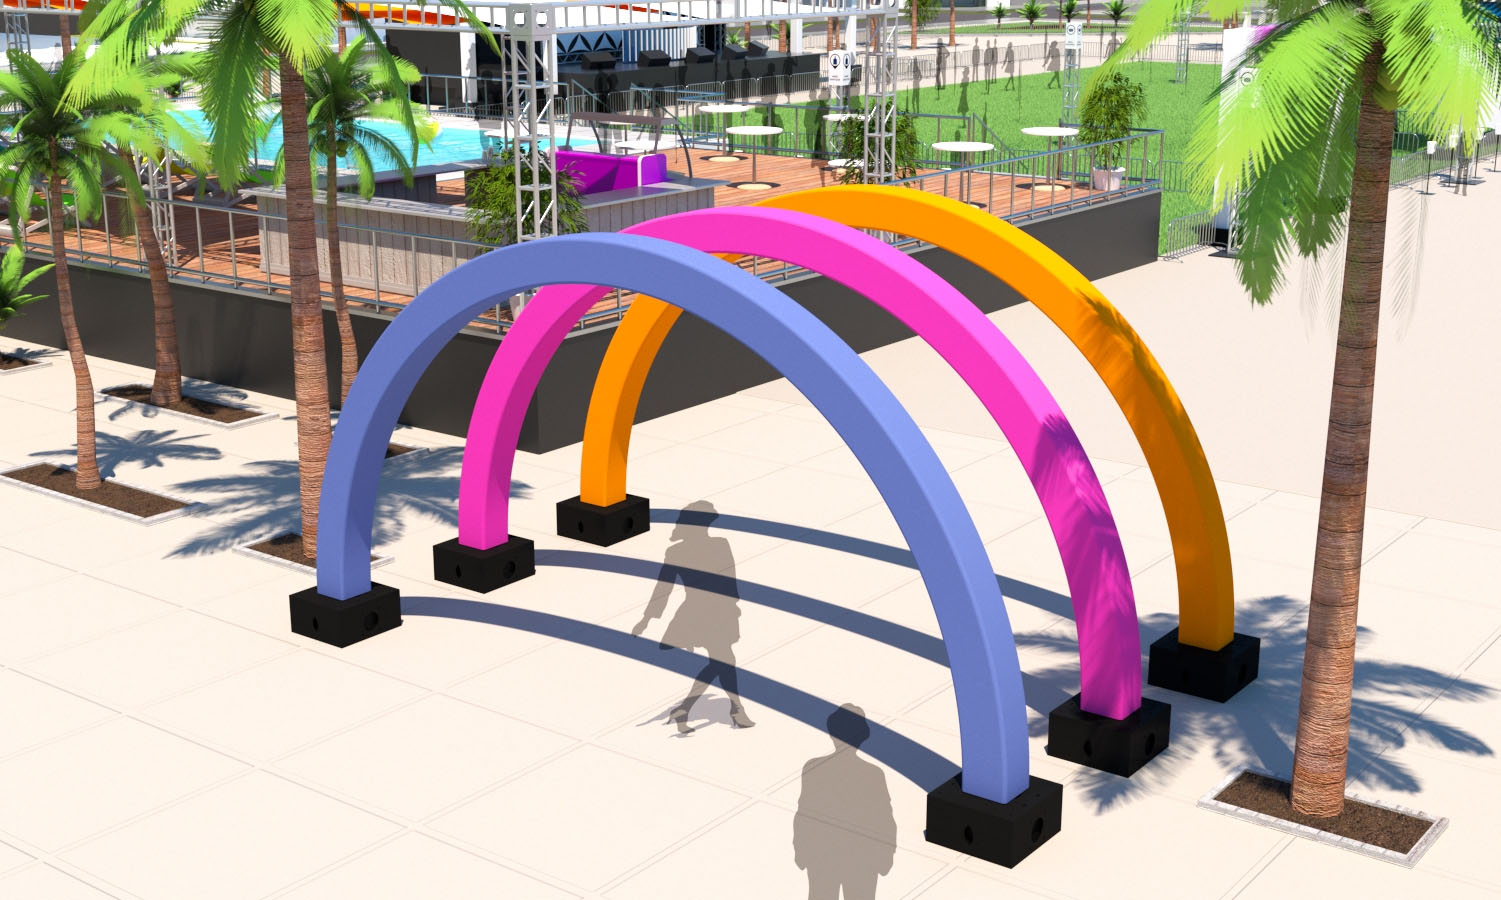 music festival design ideas using covered festival truss arches